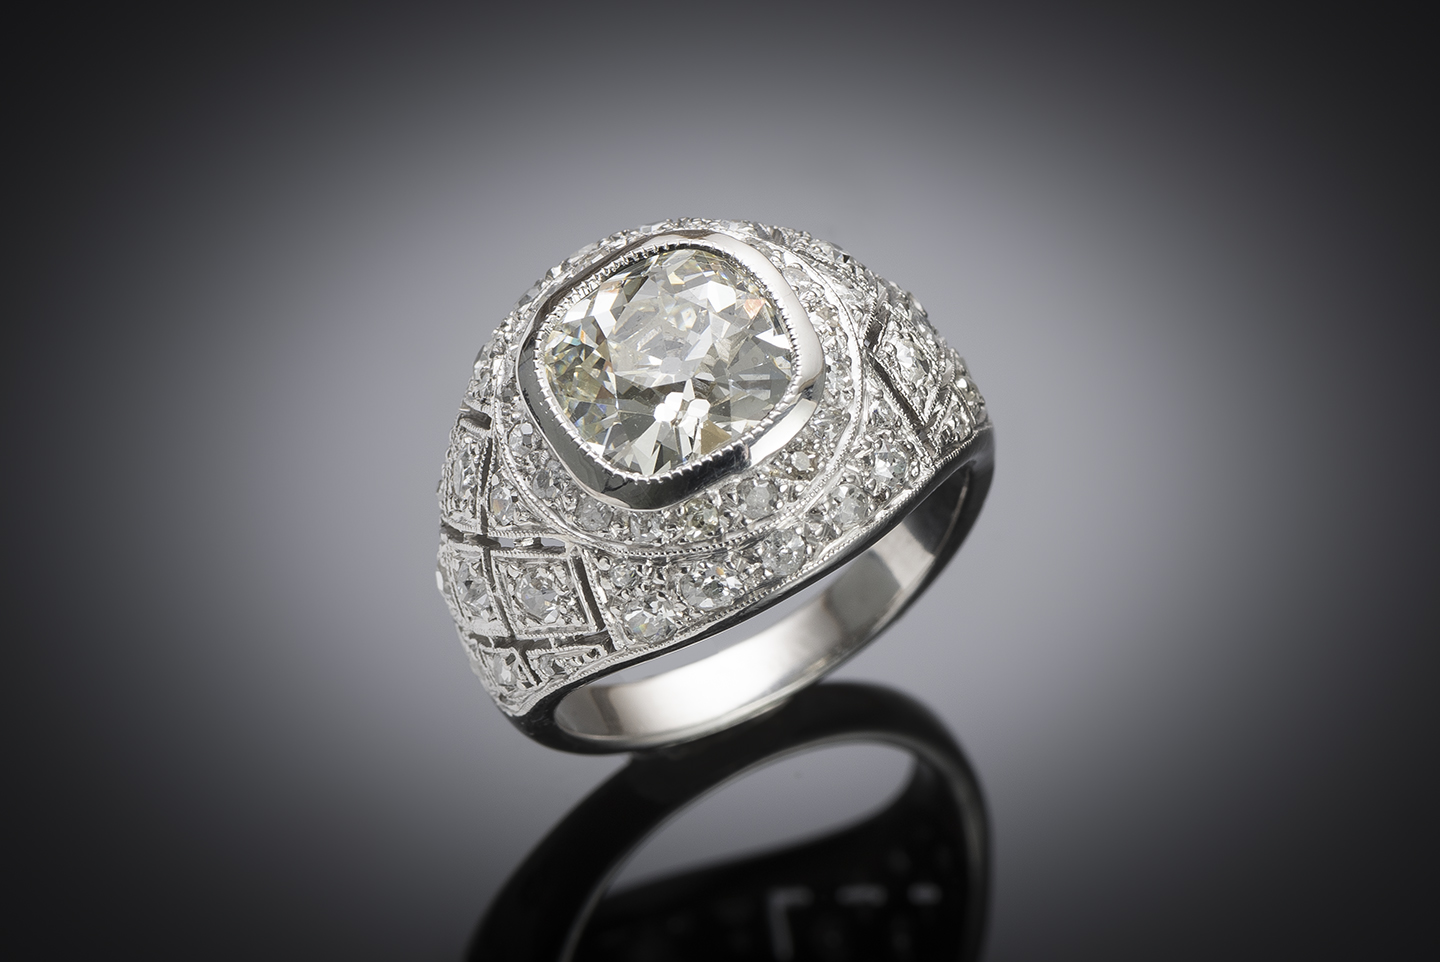 French Art Deco diamond ring (3 carats, center 2.78 carats)-1